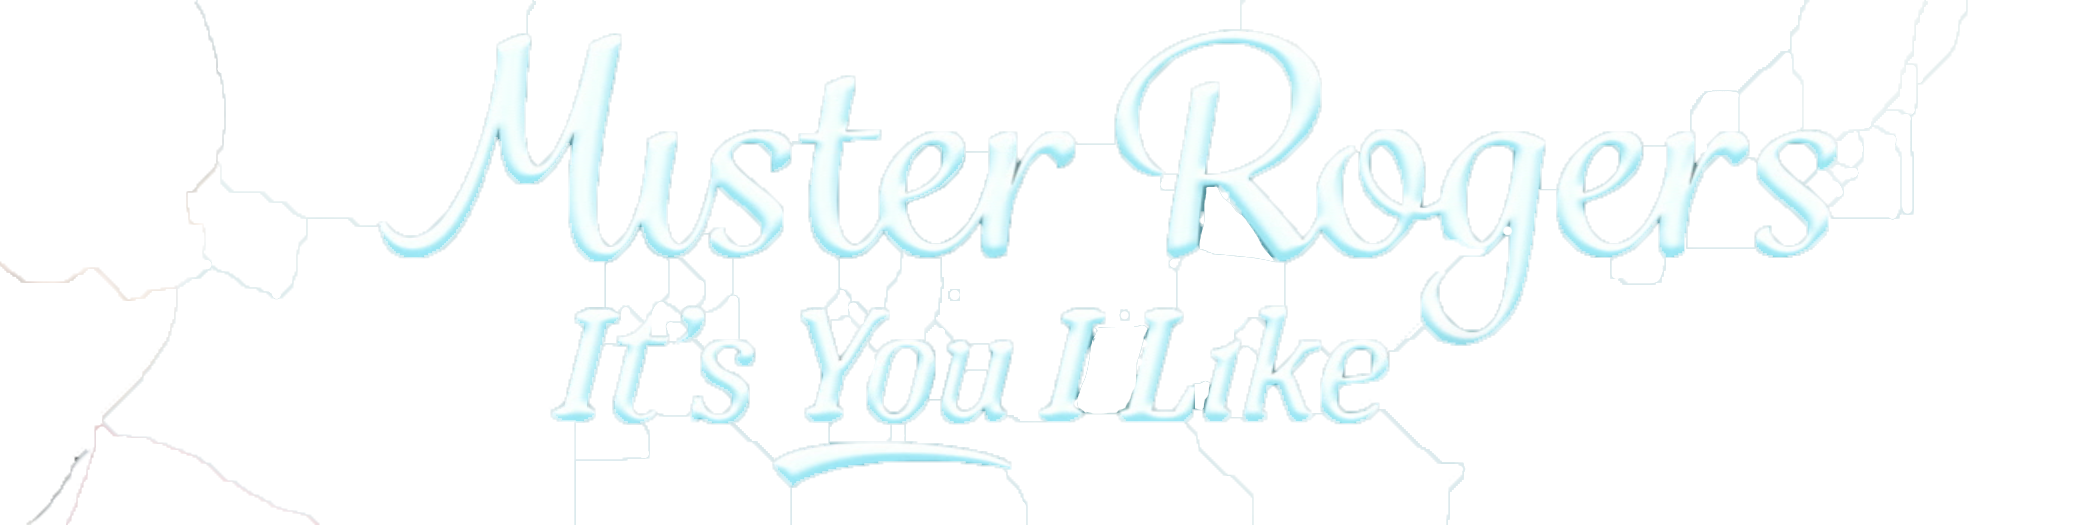 Mister Rogers: It’s You I Like